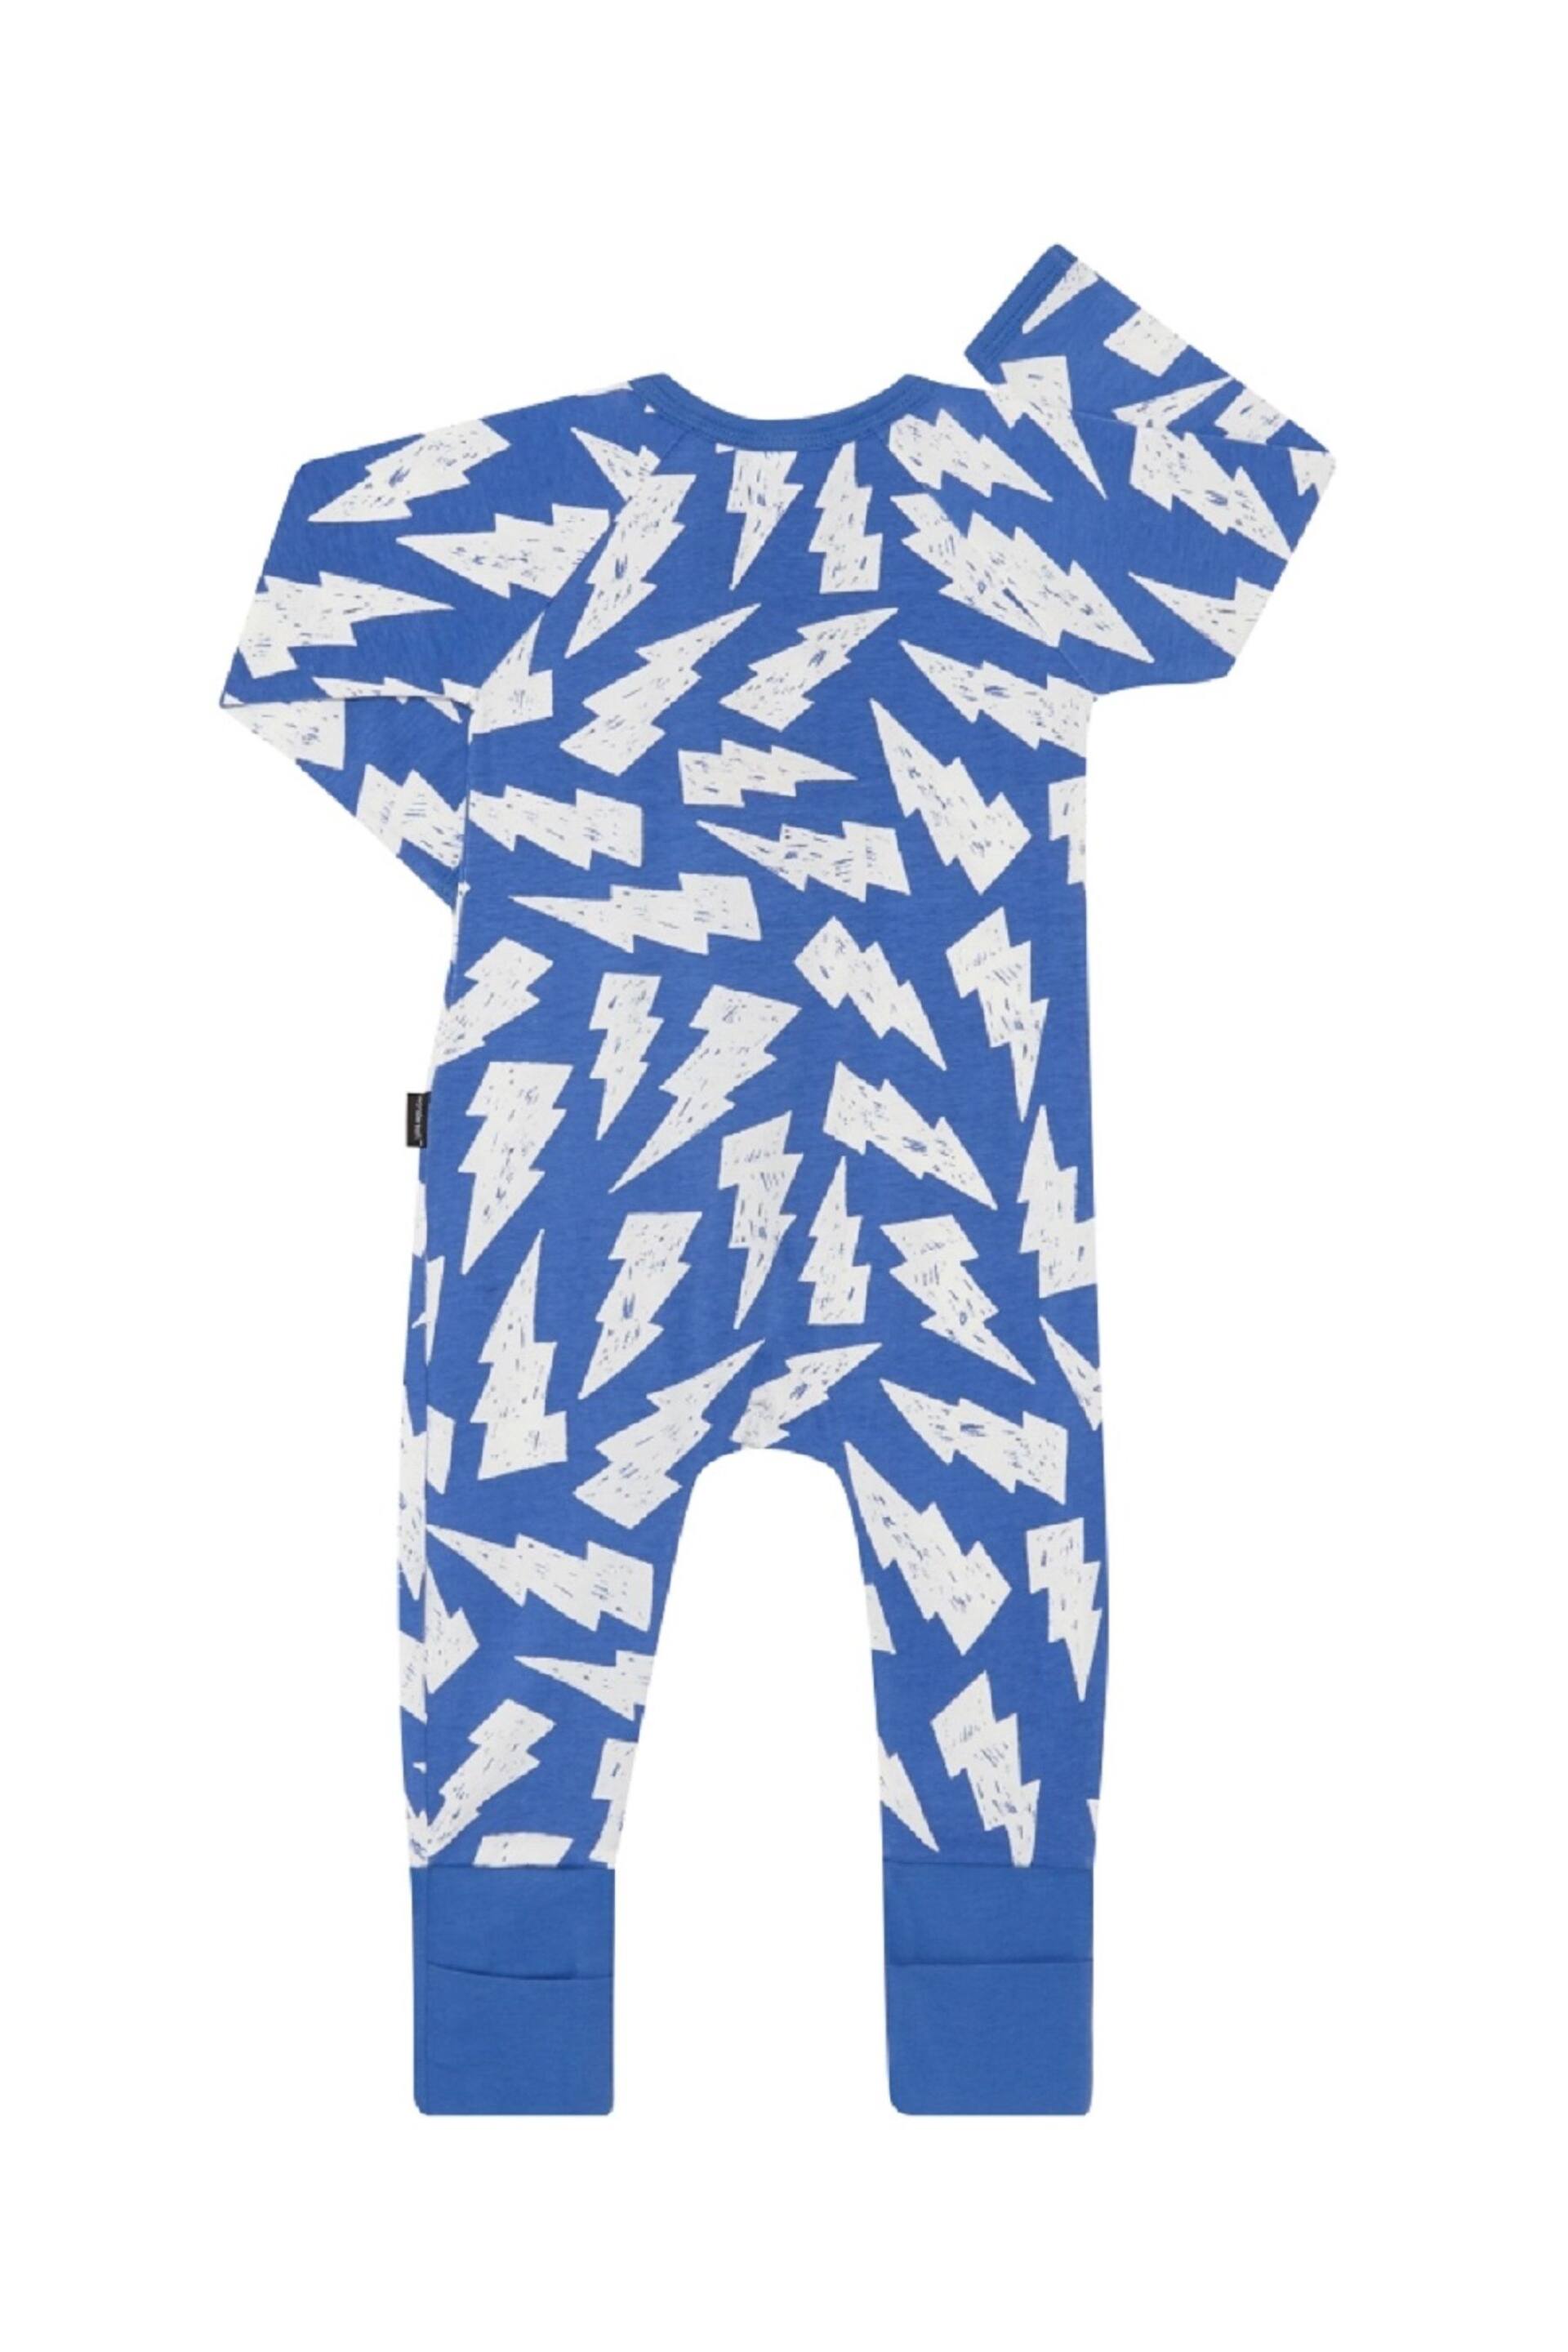 Bonds Blue Lightning Bolt Print Zip Sleepsuit - Image 2 of 4